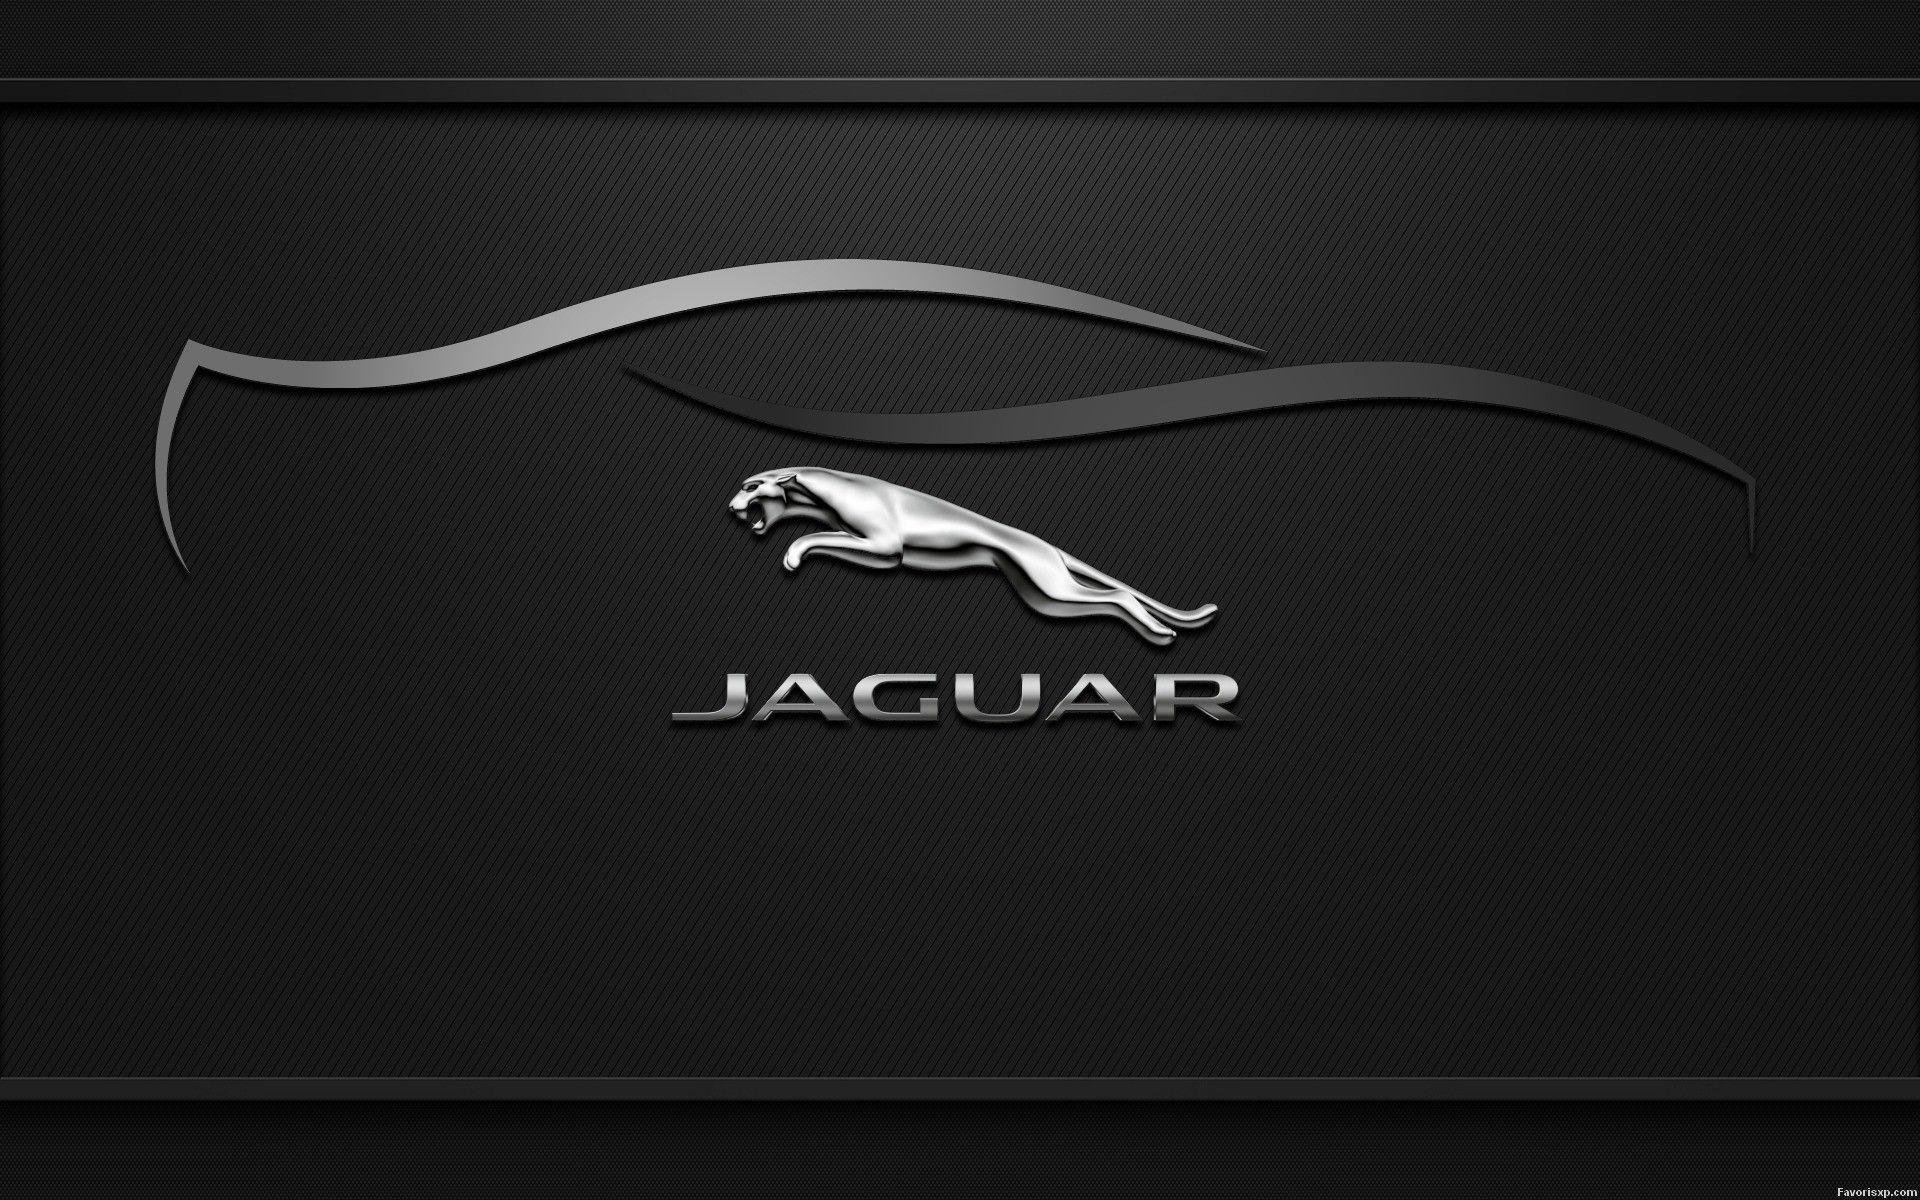 Jaguar Car Logo Wallpaper Desktop On Wallpaper 1080p HD. Jaguar car logo, Jaguar car, Car logos